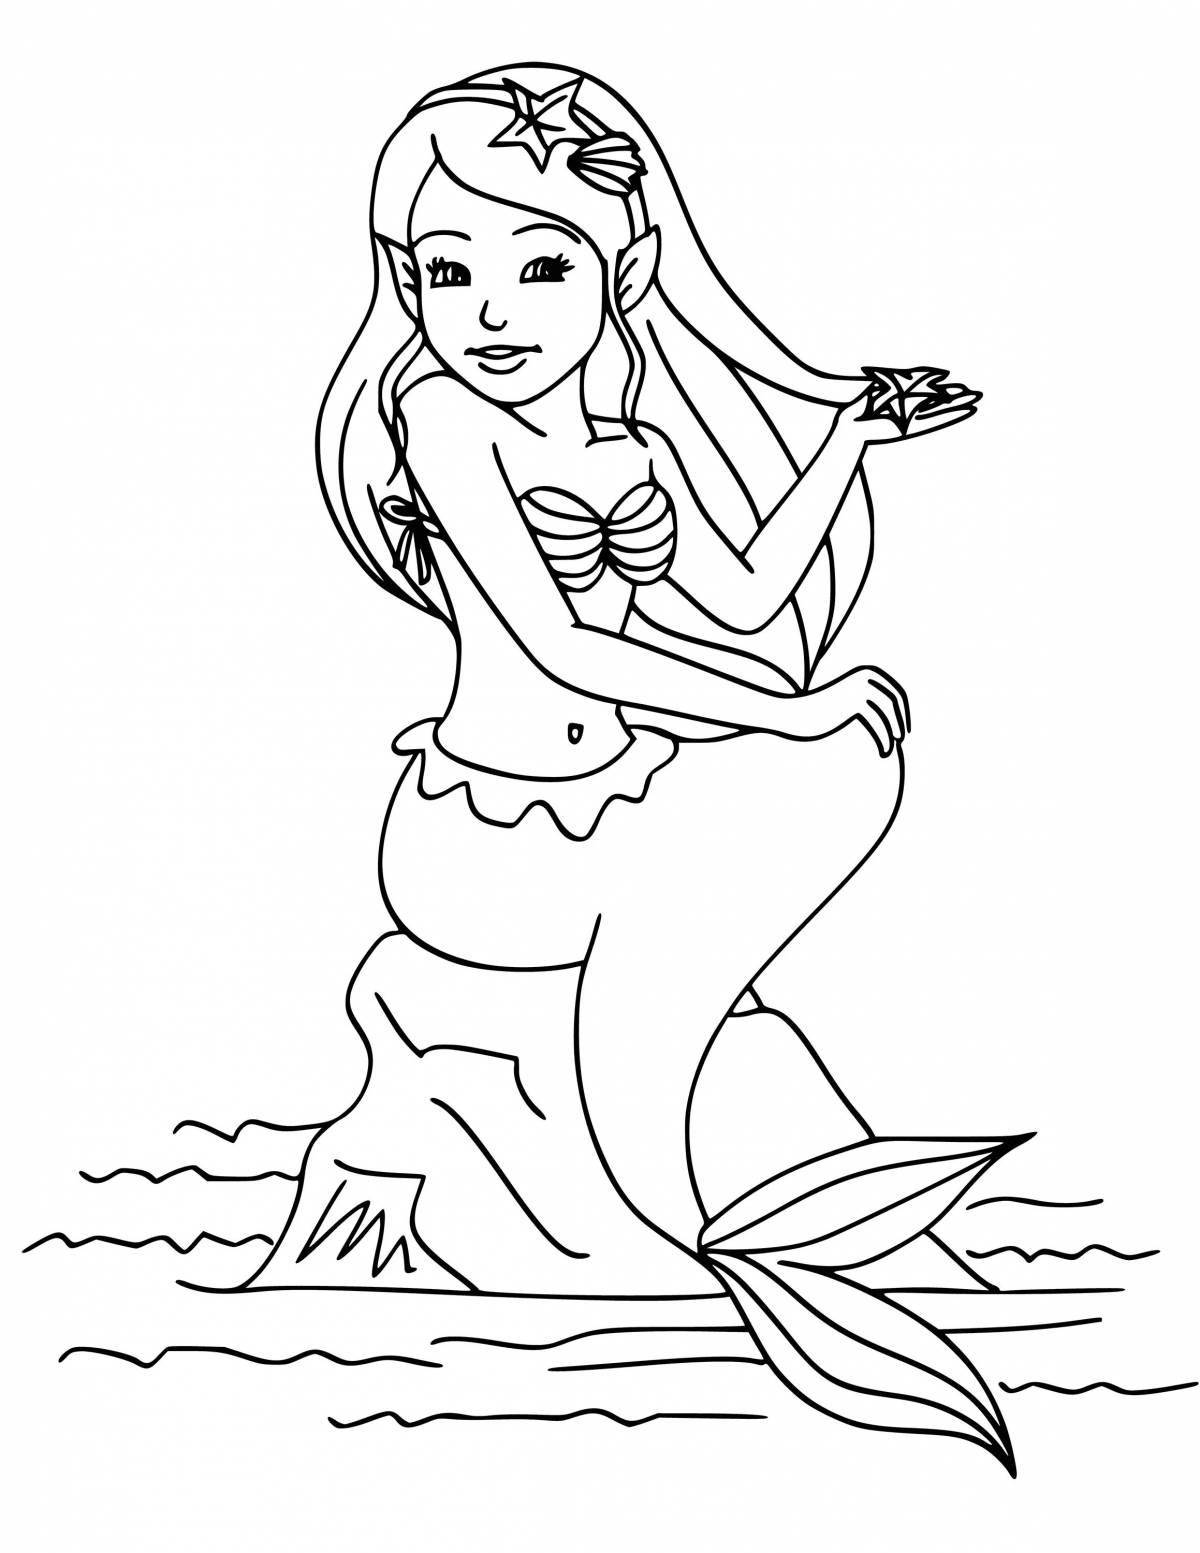 Fancy coloring drawing of a mermaid